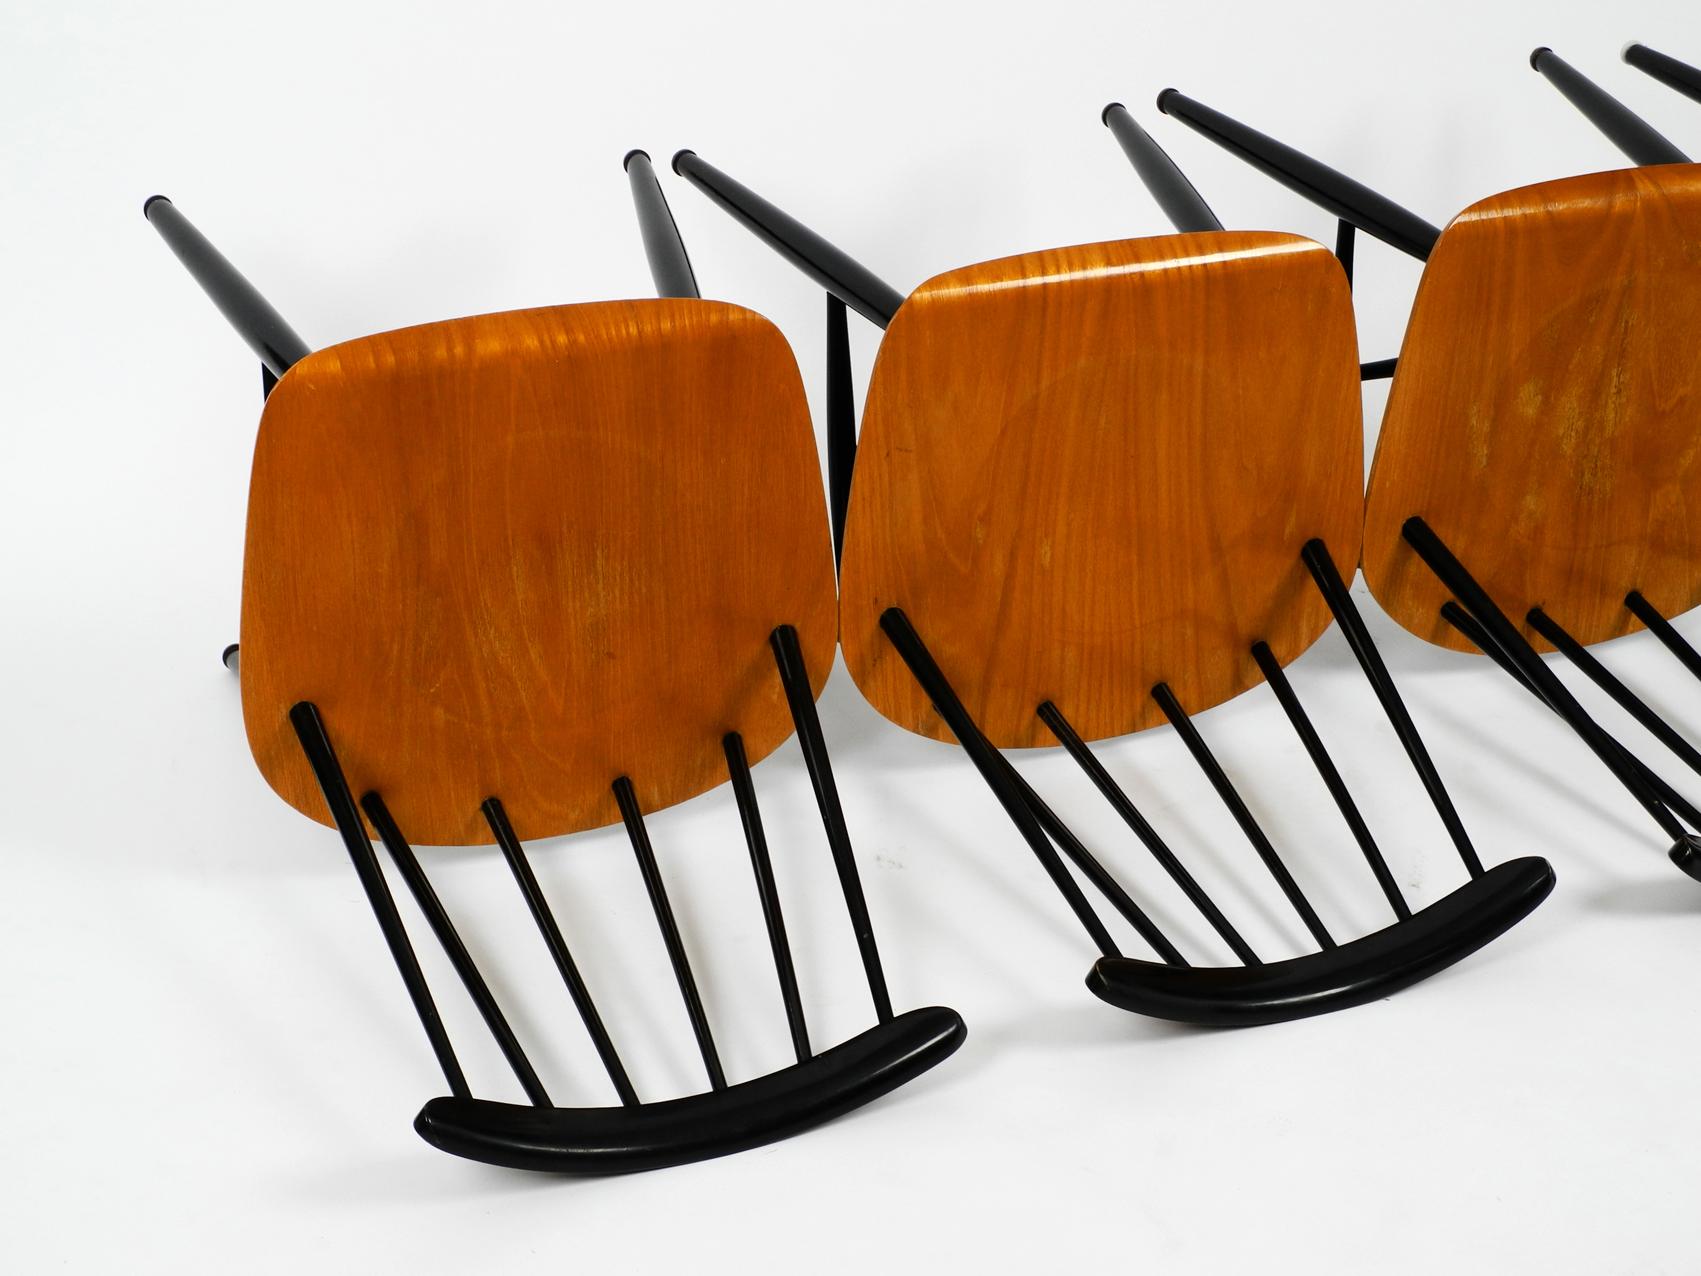 Finnish Set of 4 Original Fanett Chairs by Ilmari Tapiovaara for Asko Made in Finland